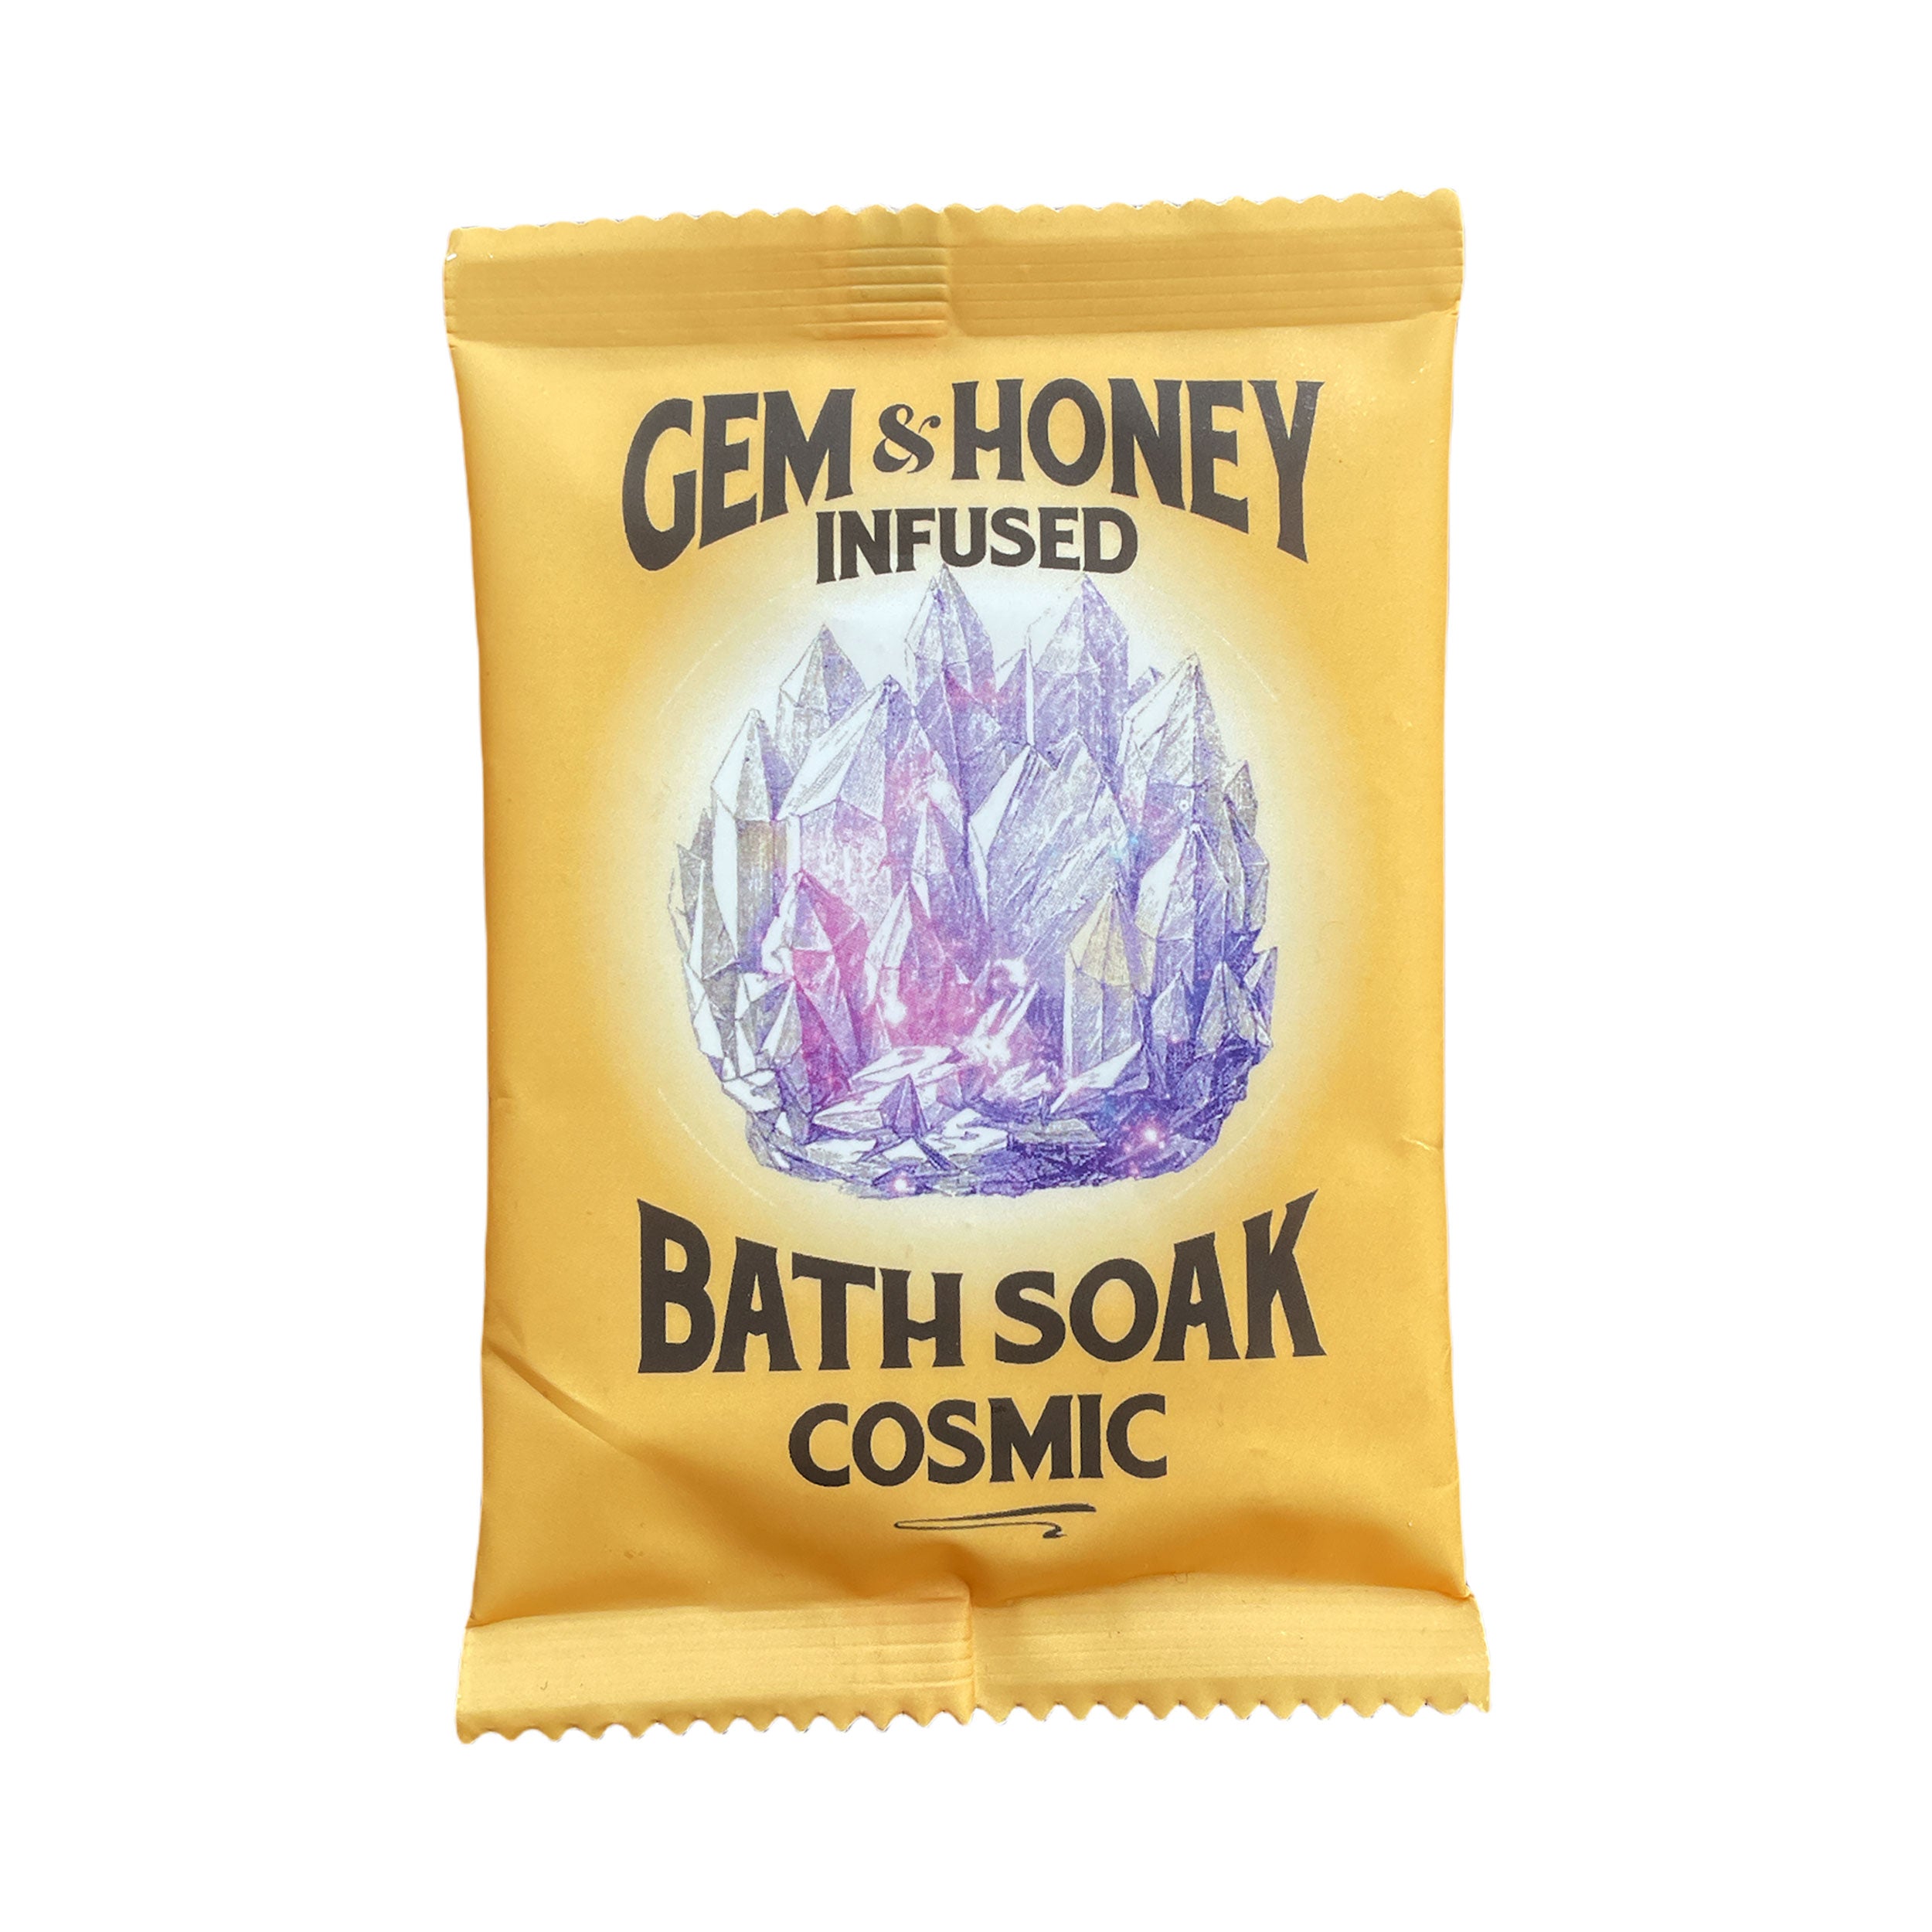 Gem & Honey Infused Bath Soak - Cosmic